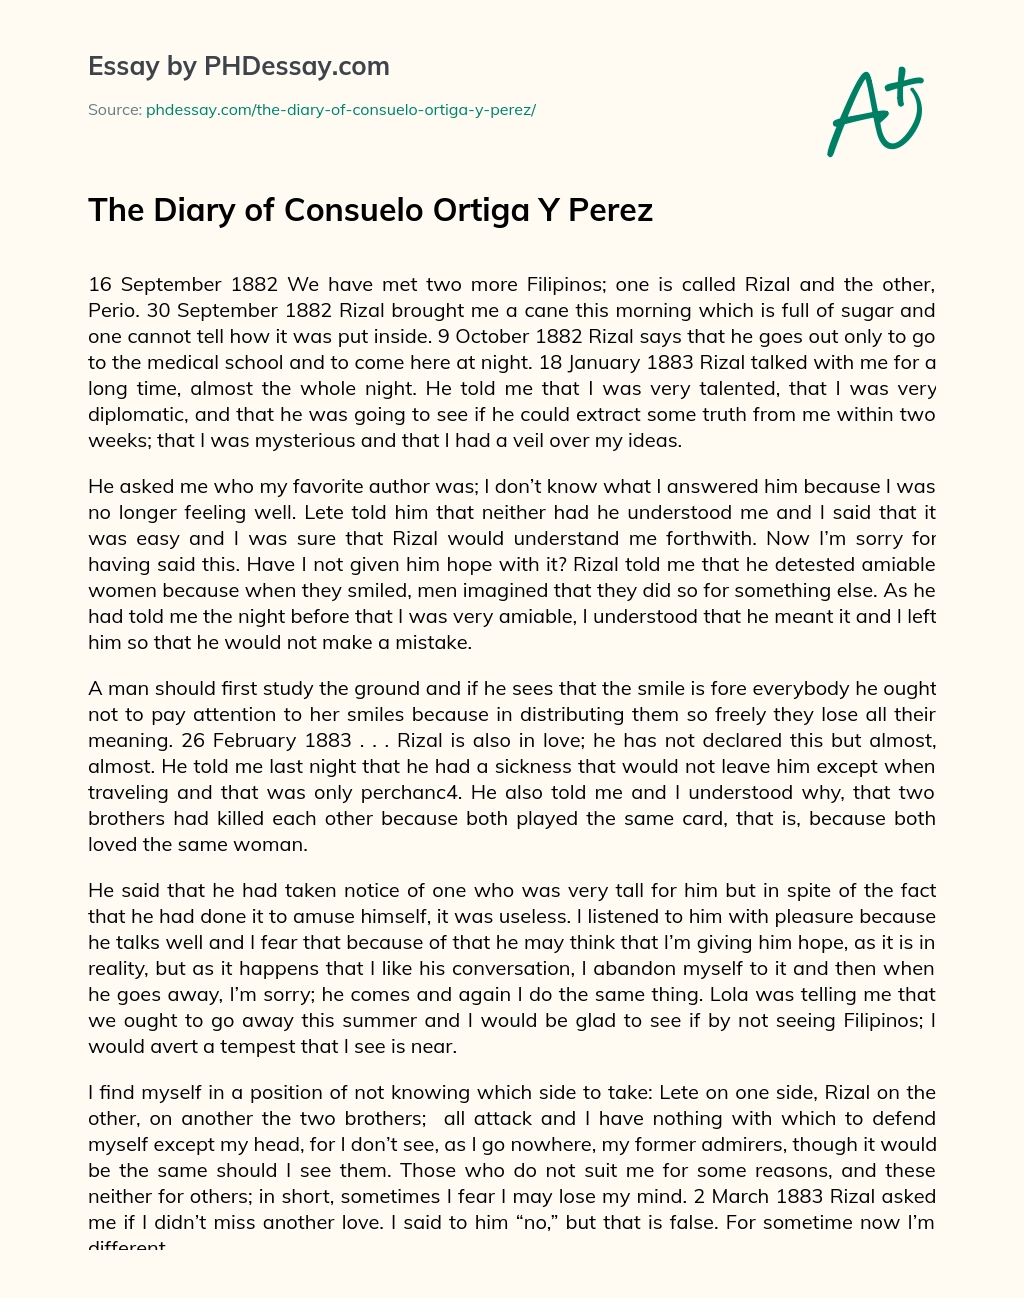 The Diary of Consuelo Ortiga Y Perez essay